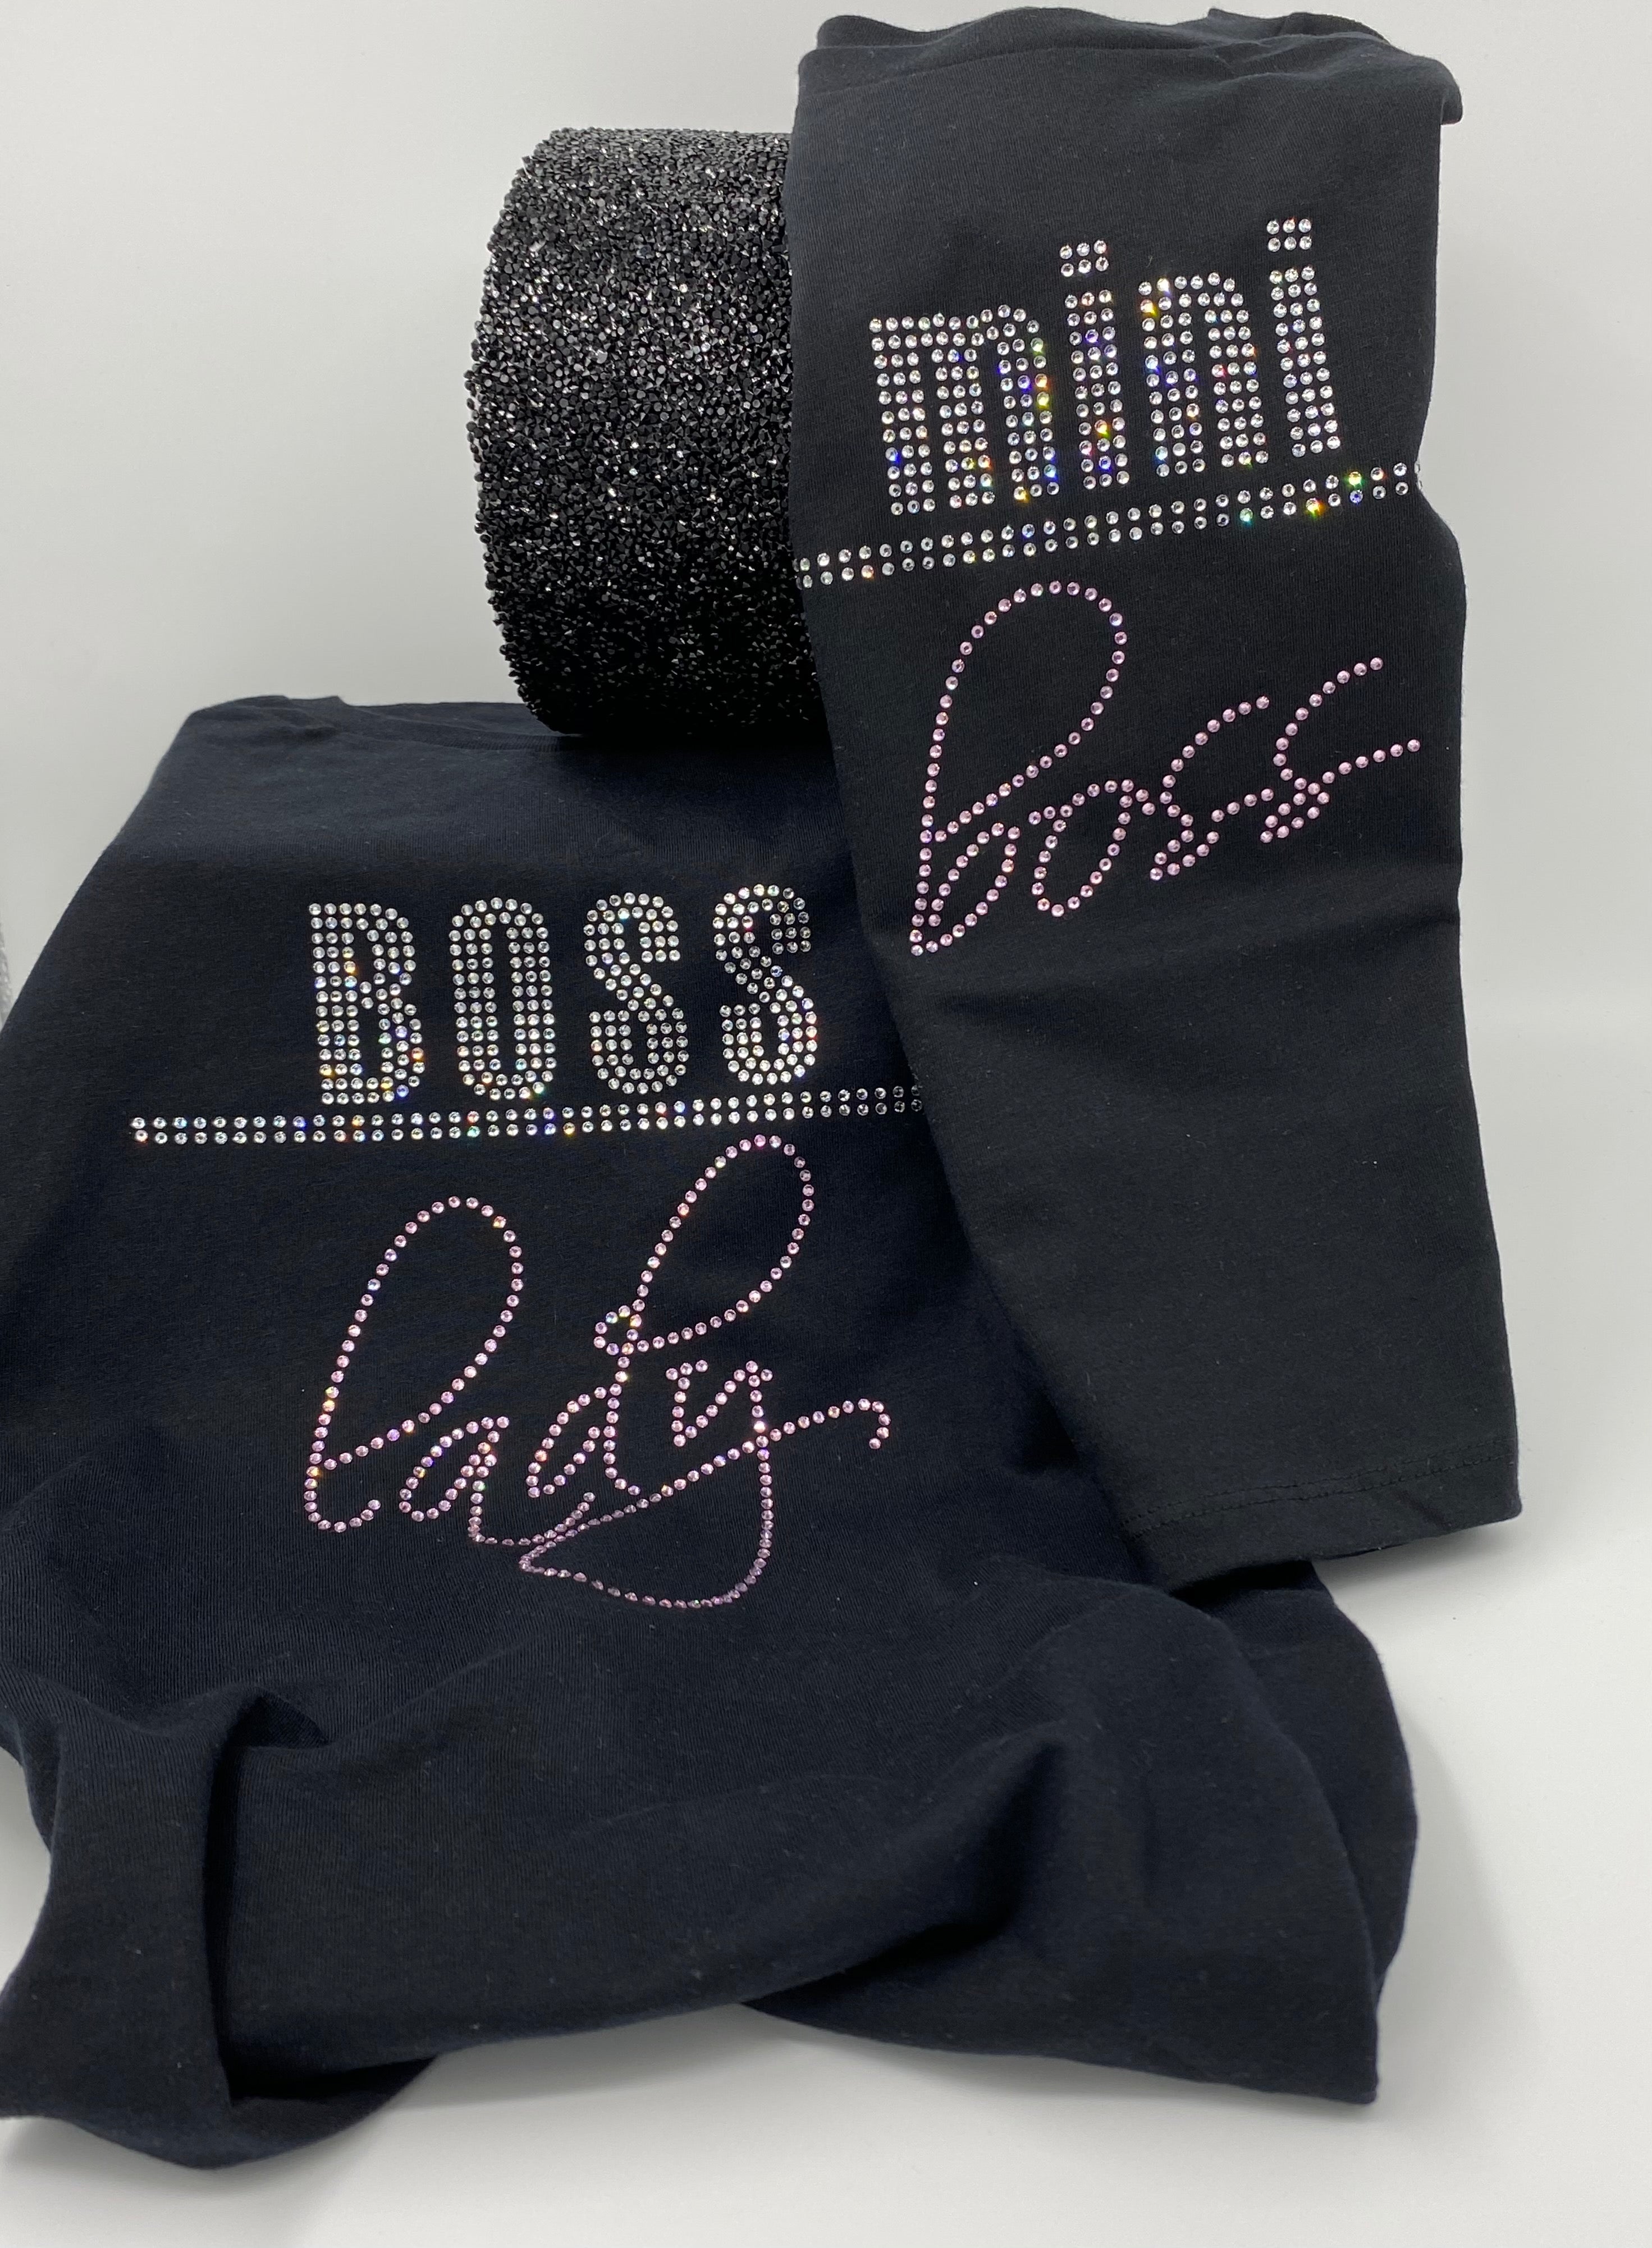 Boss Lady/Mini Boss Mother/Daughter Tee Set